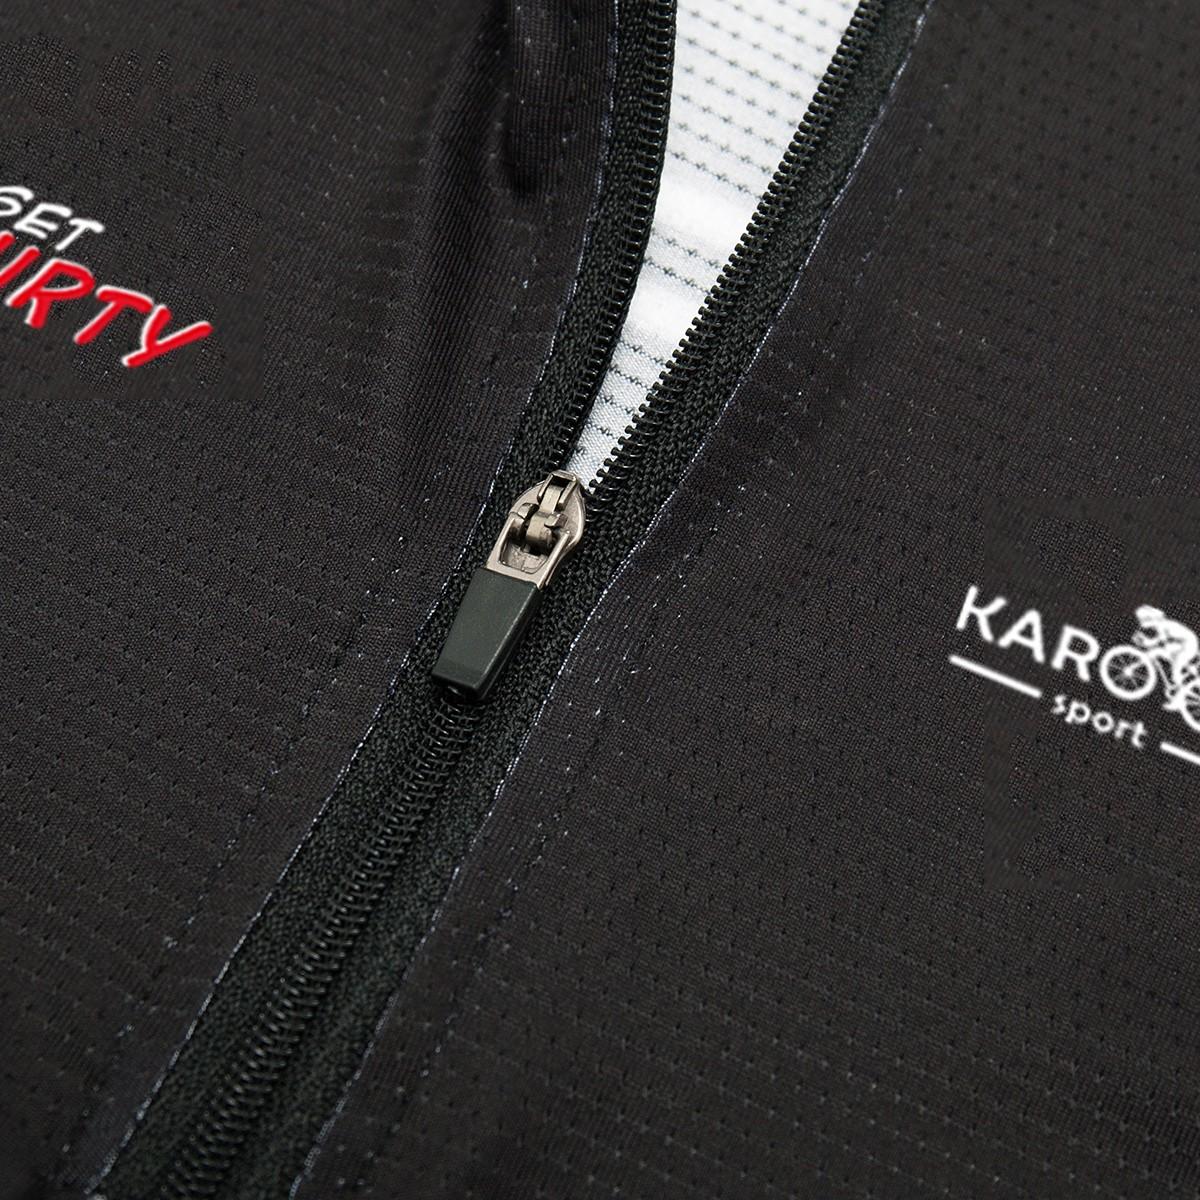 Karool running wear manufacturer for women-2